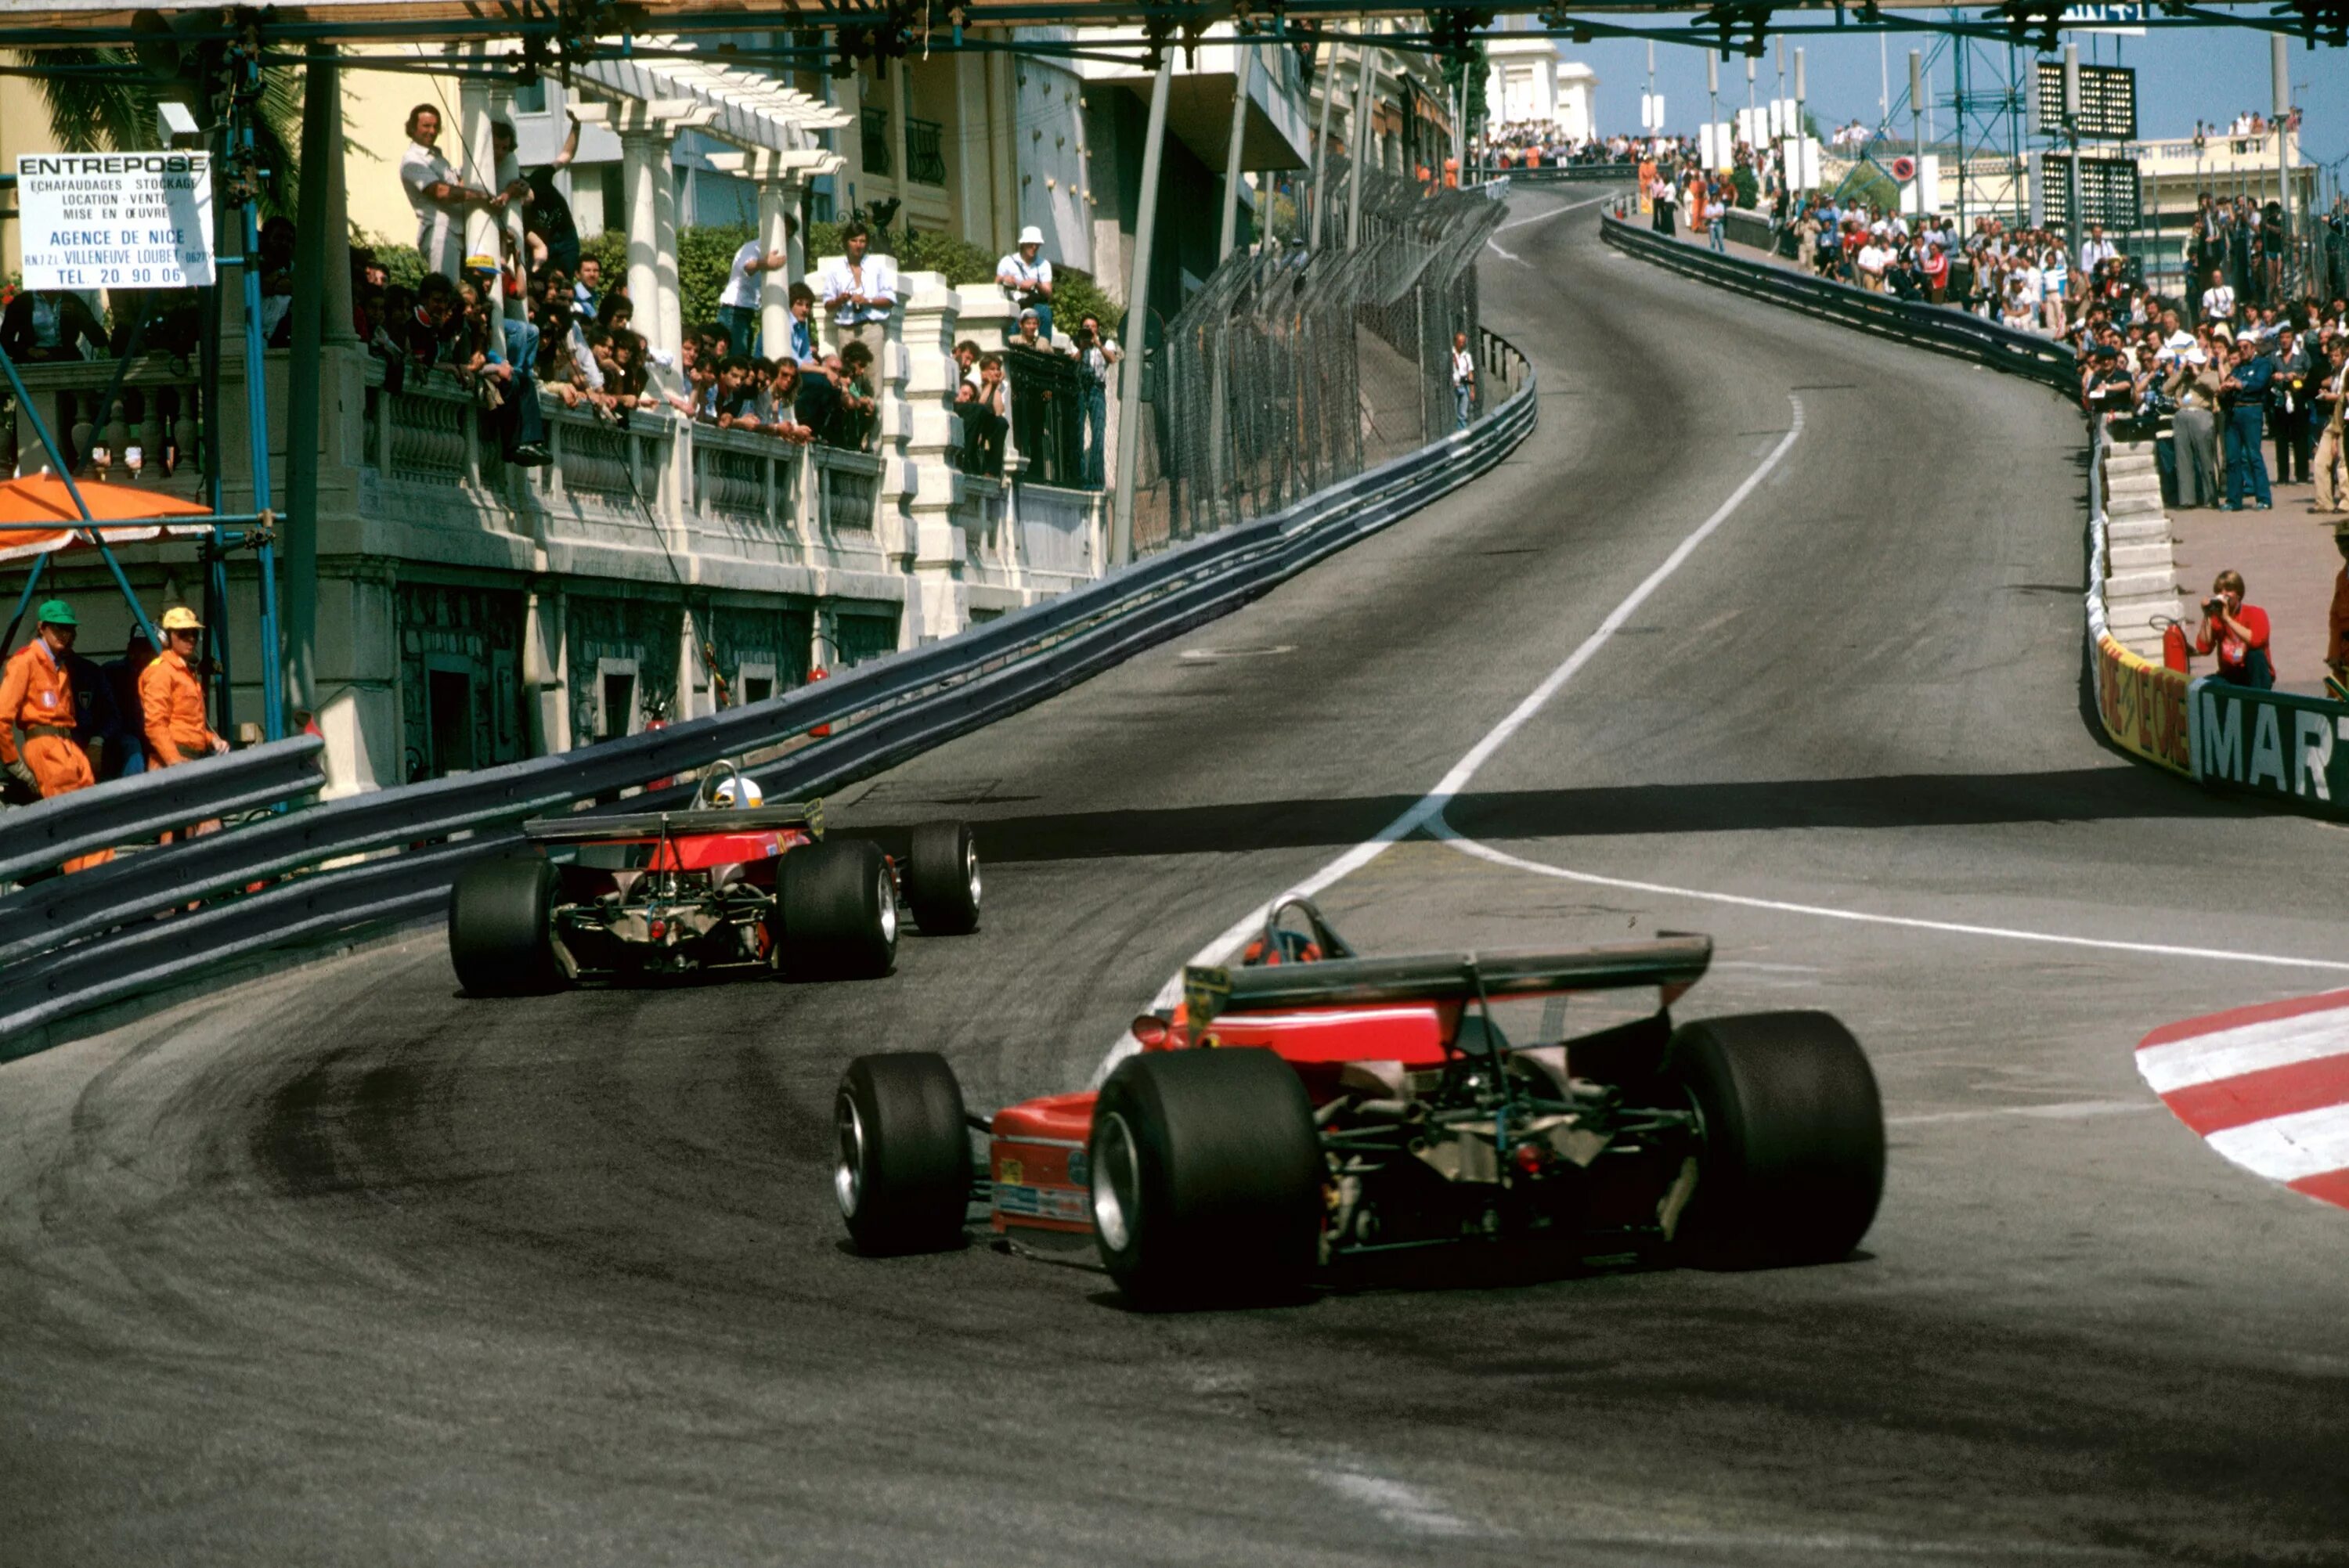 Формула 4 гонки. Феррари ф1 Вильнев. Ferrari 1997 f1 Cockpit. Ф1 гонки. Формула 1 гонка Монако 1970 года.